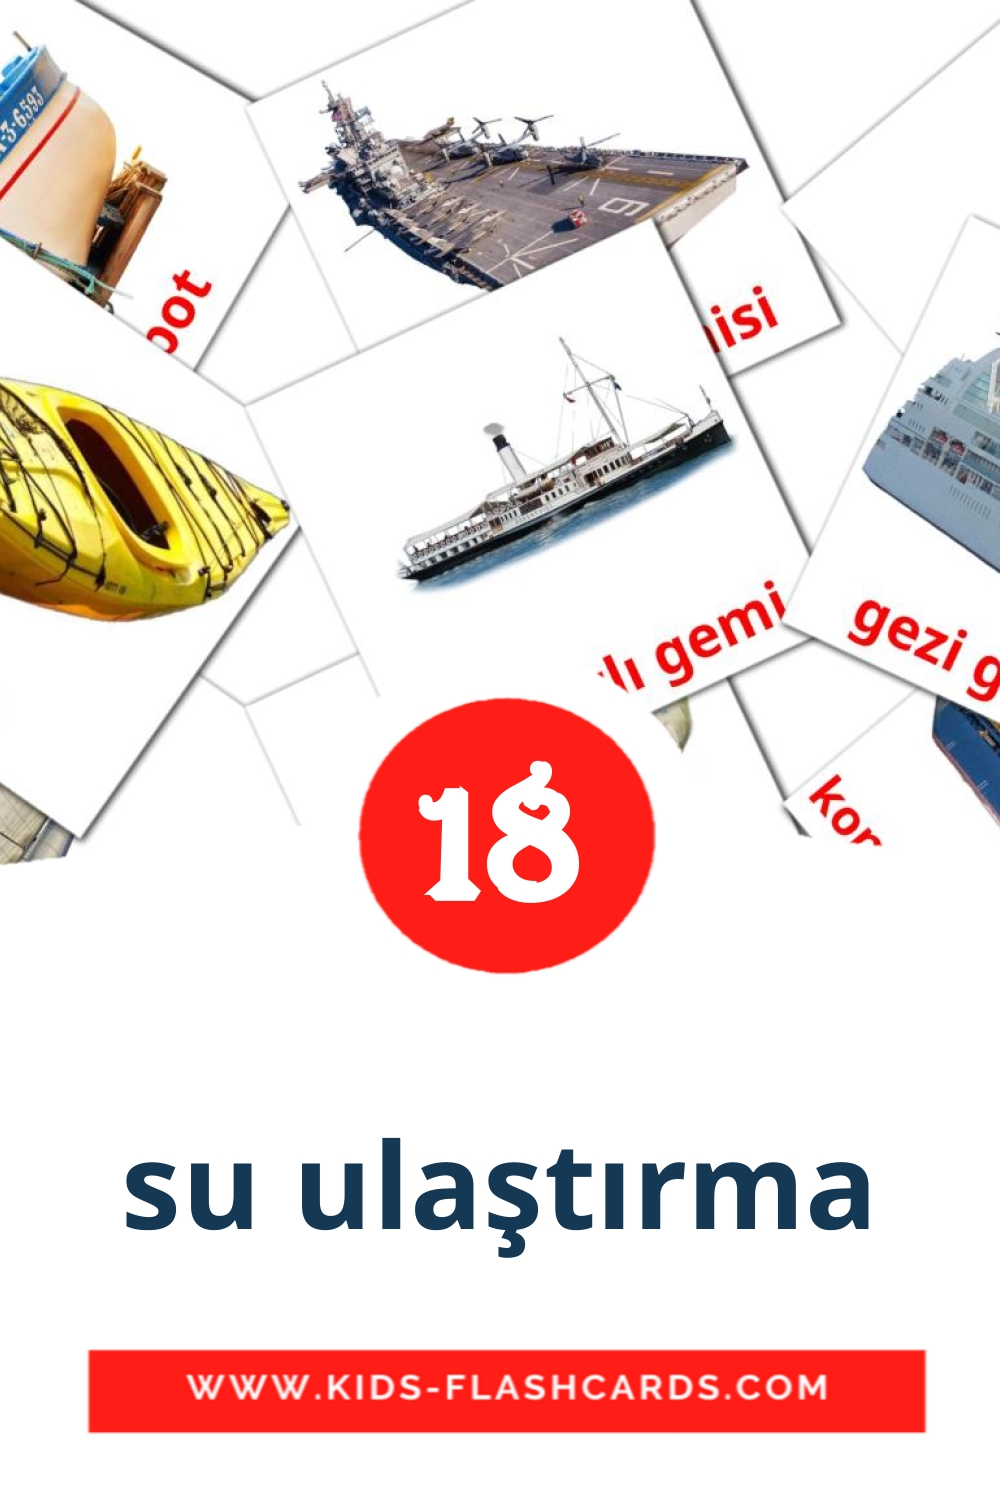 18 cartes illustrées de su ulaştırma pour la maternelle en turc